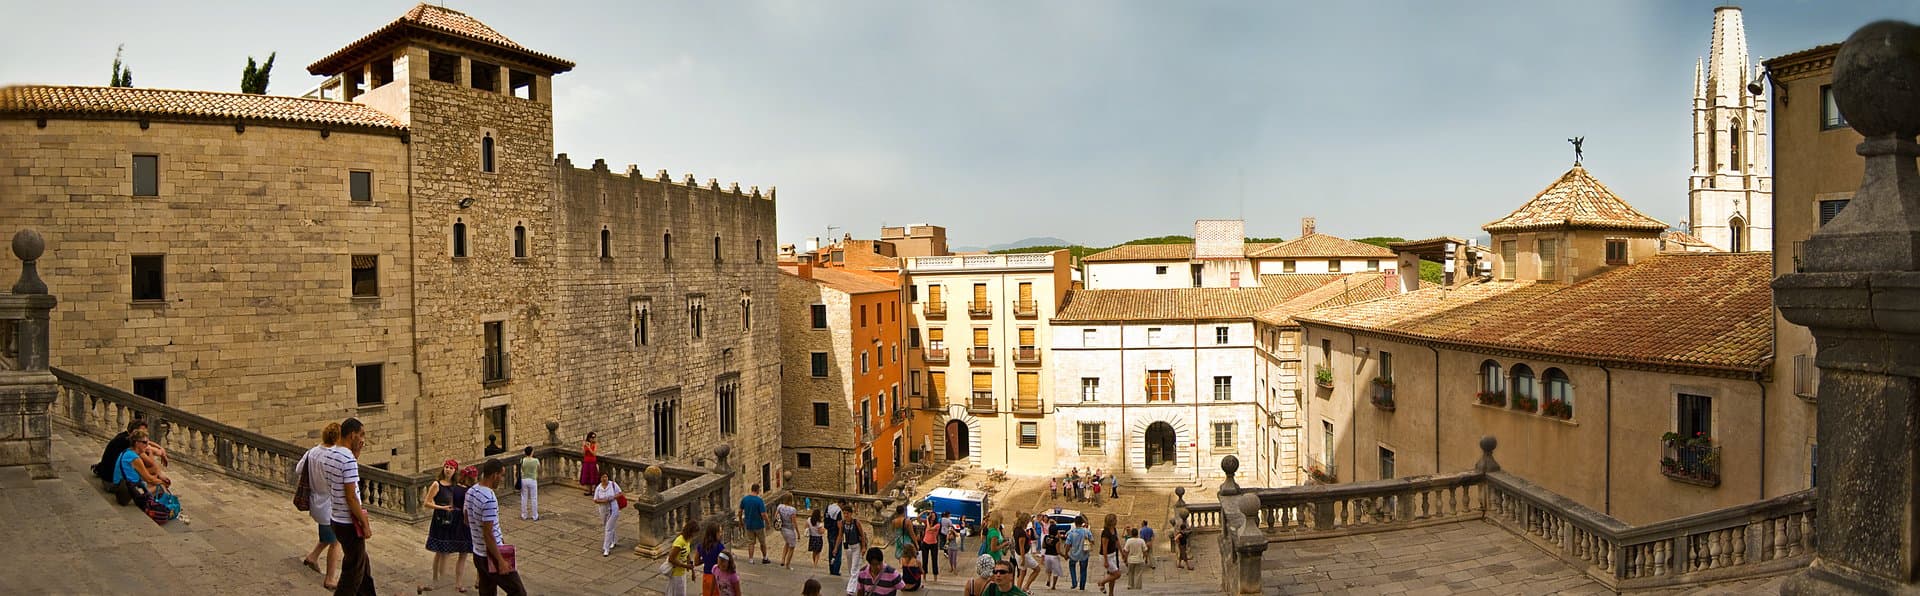 Free Game of Thrones Tour Girona Banner